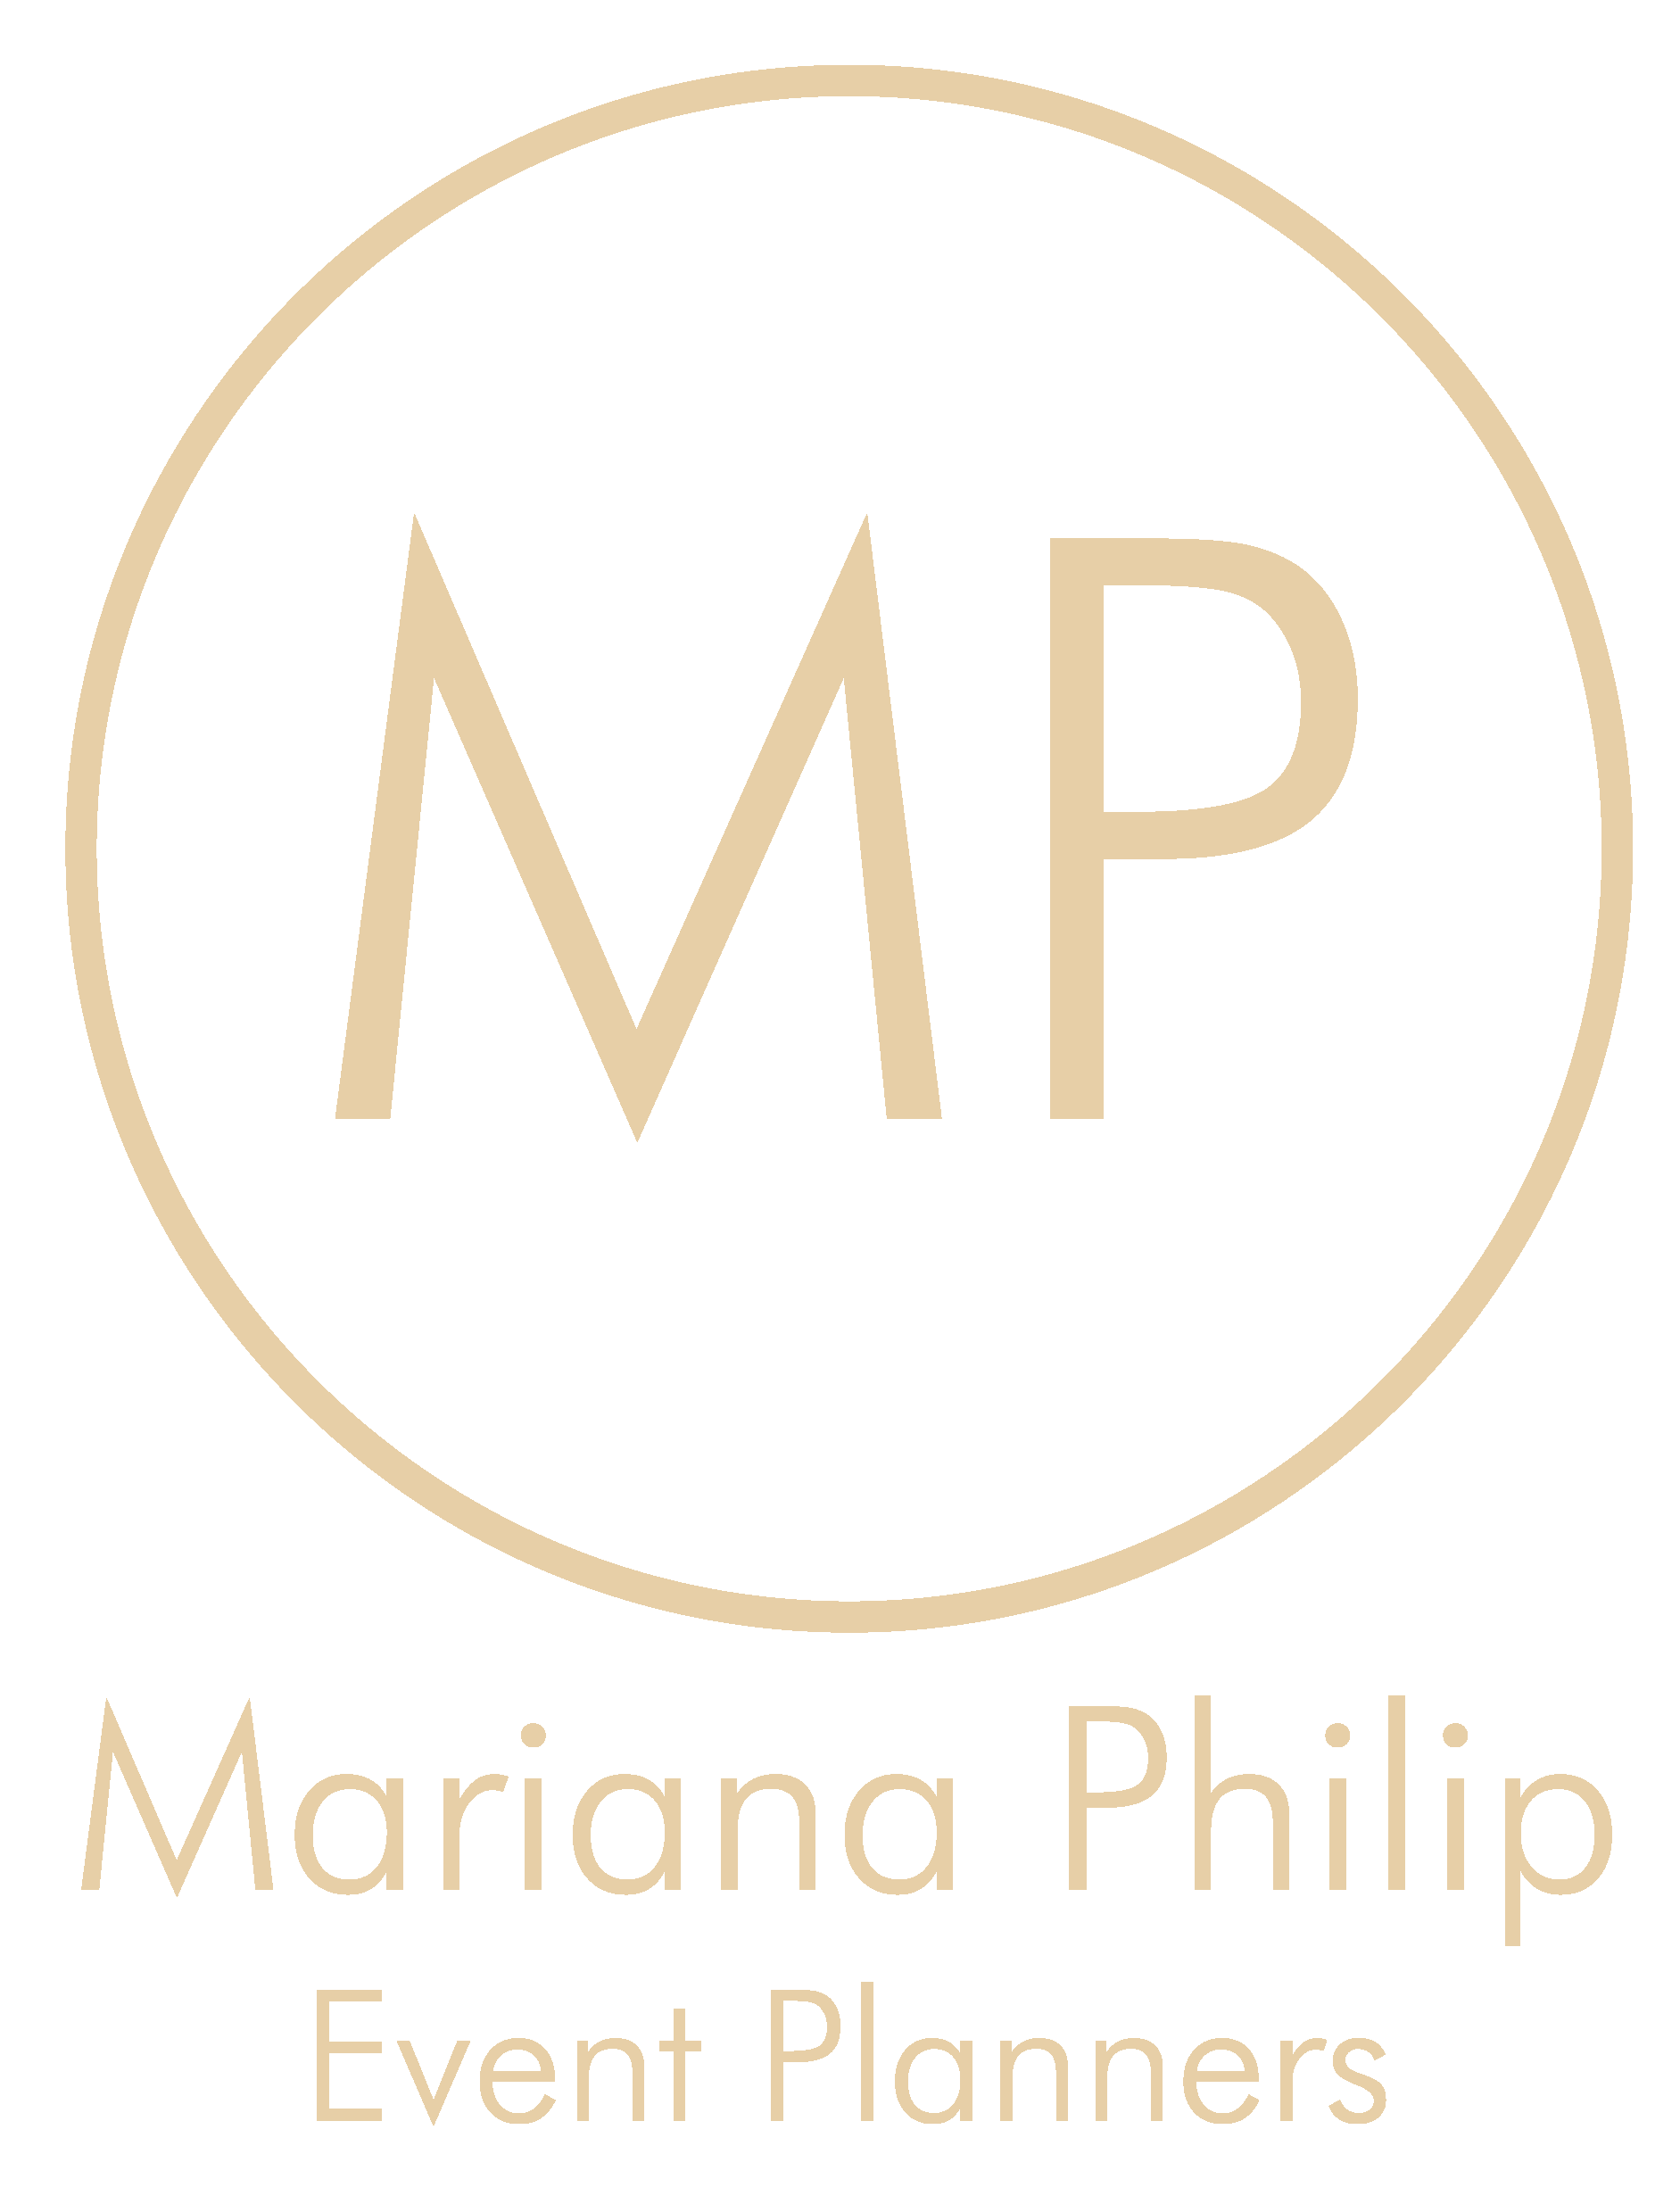 Mariana Philip